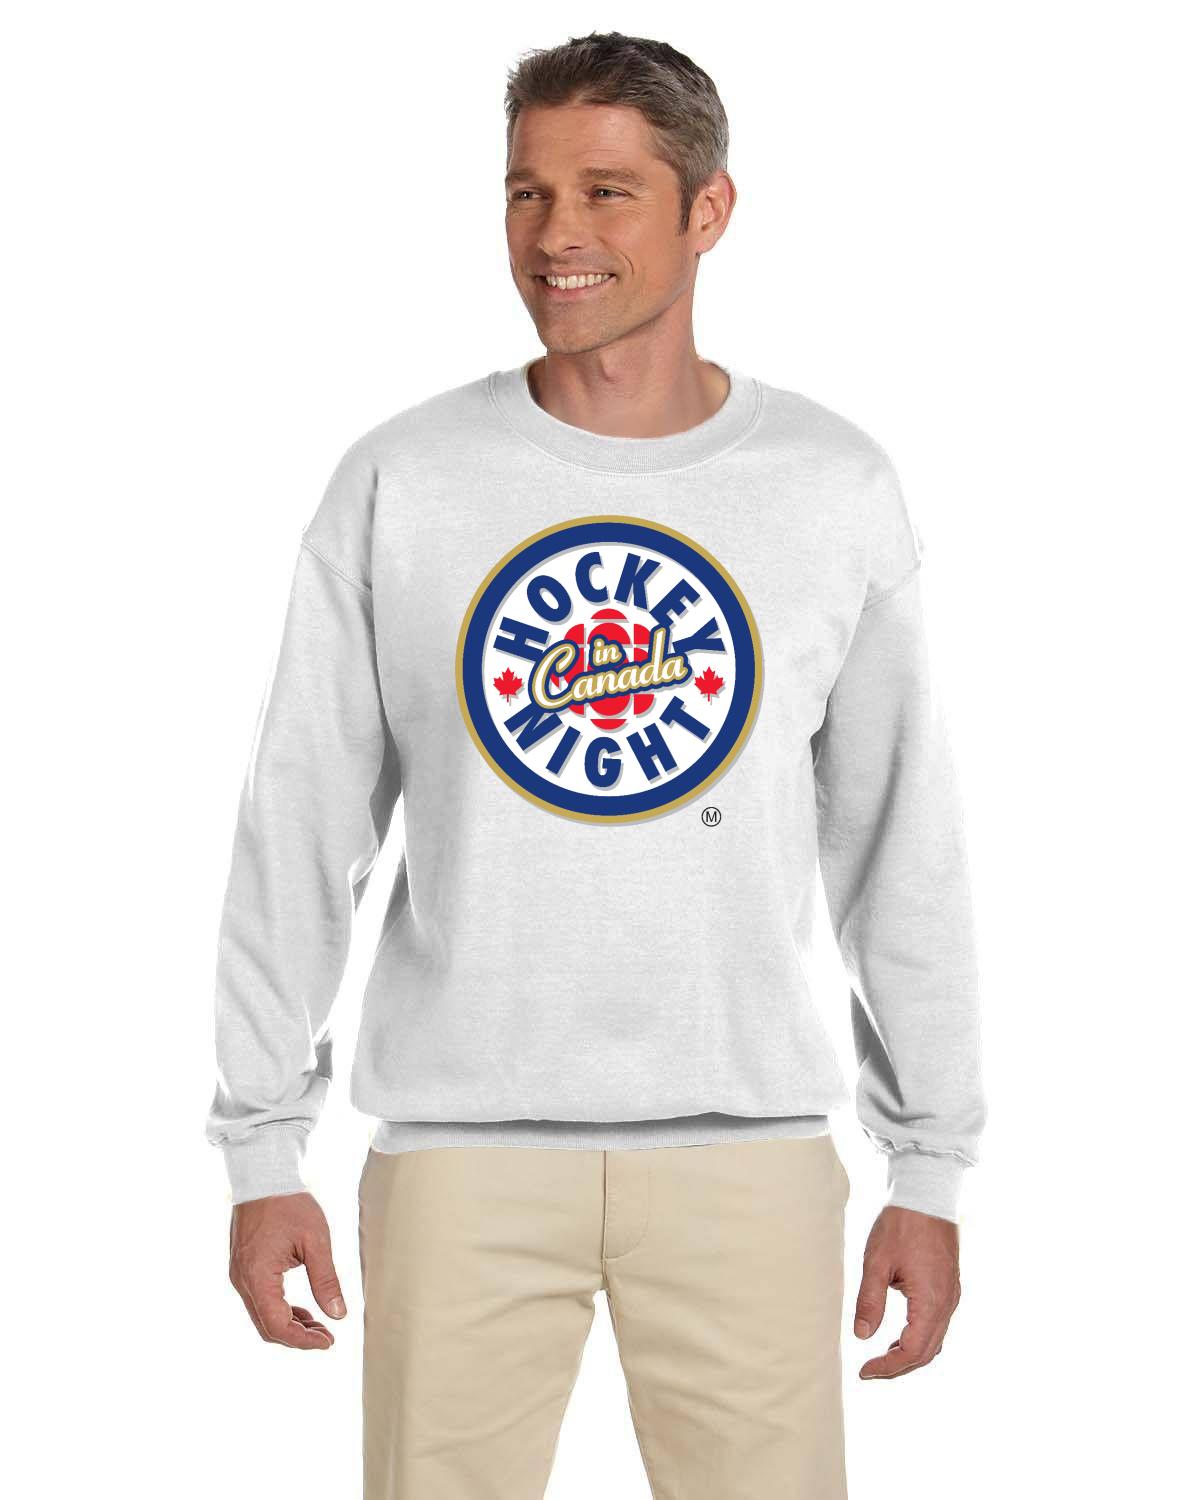 Hockey Night In Canada Shadow Logo, Hockey Sweatshirt, HNIC Sweatshirt - Officially Licensed CBC Apparel